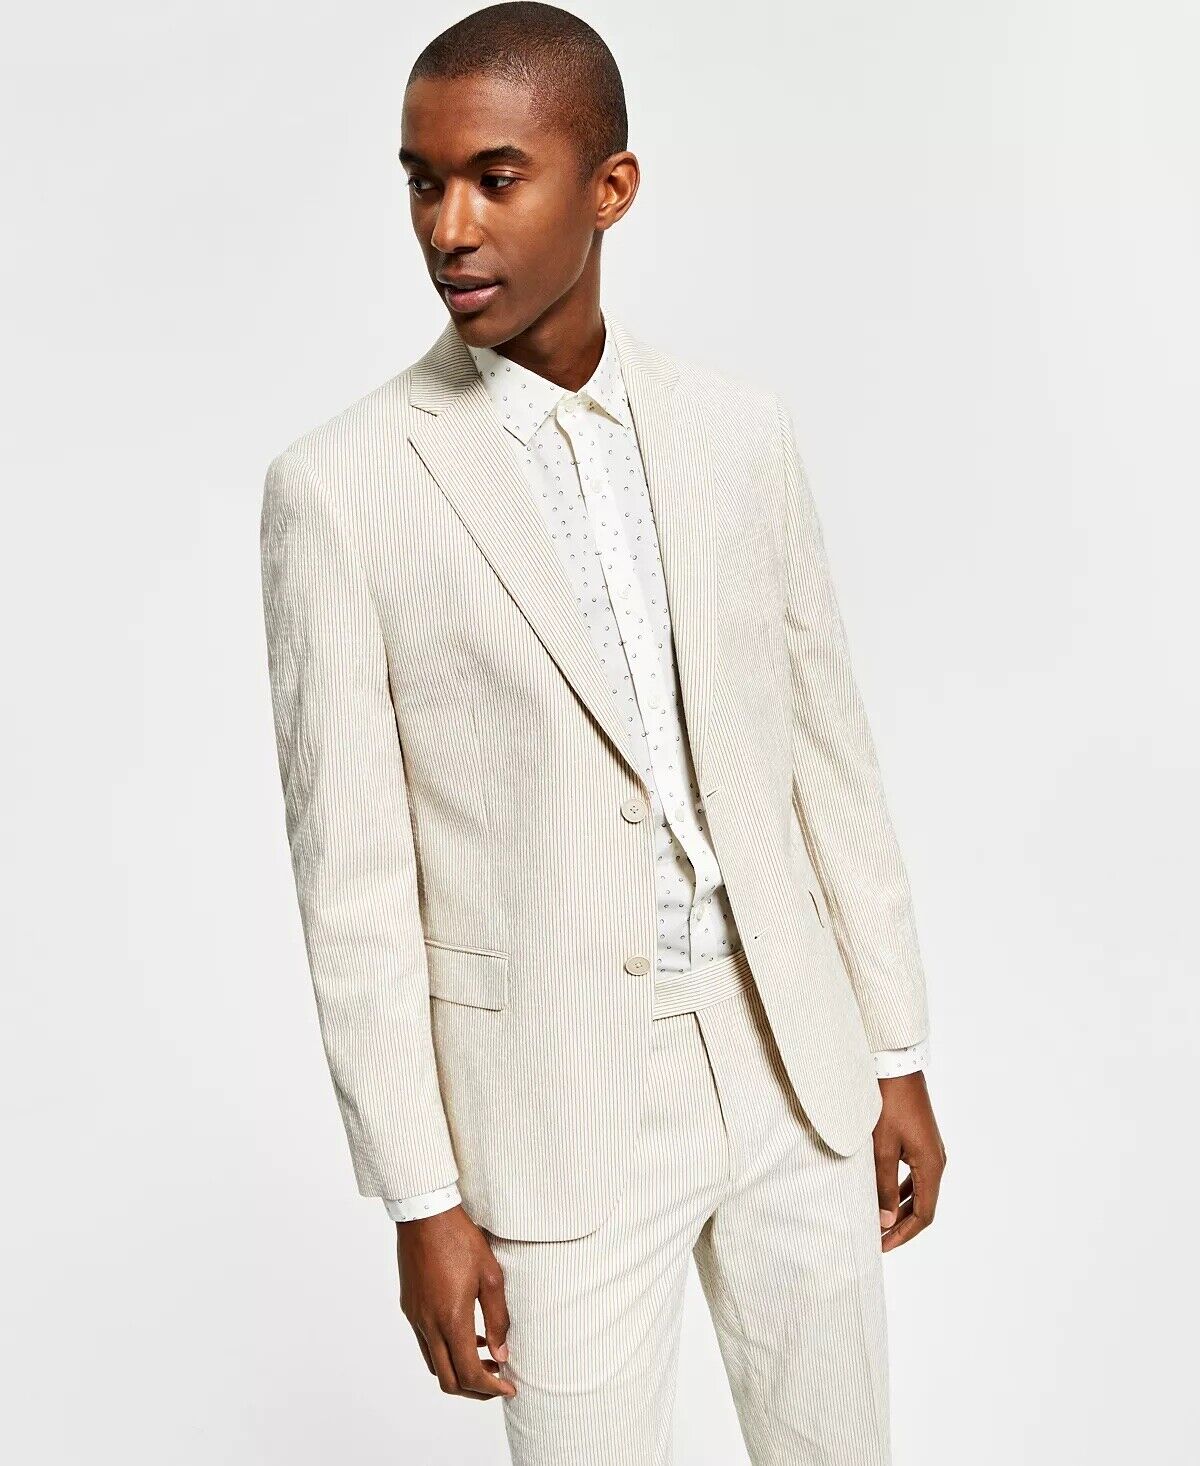 ALFANI Men's Slim-Fit Seersucker Stripe Suit Jacket Tan Cream 44R